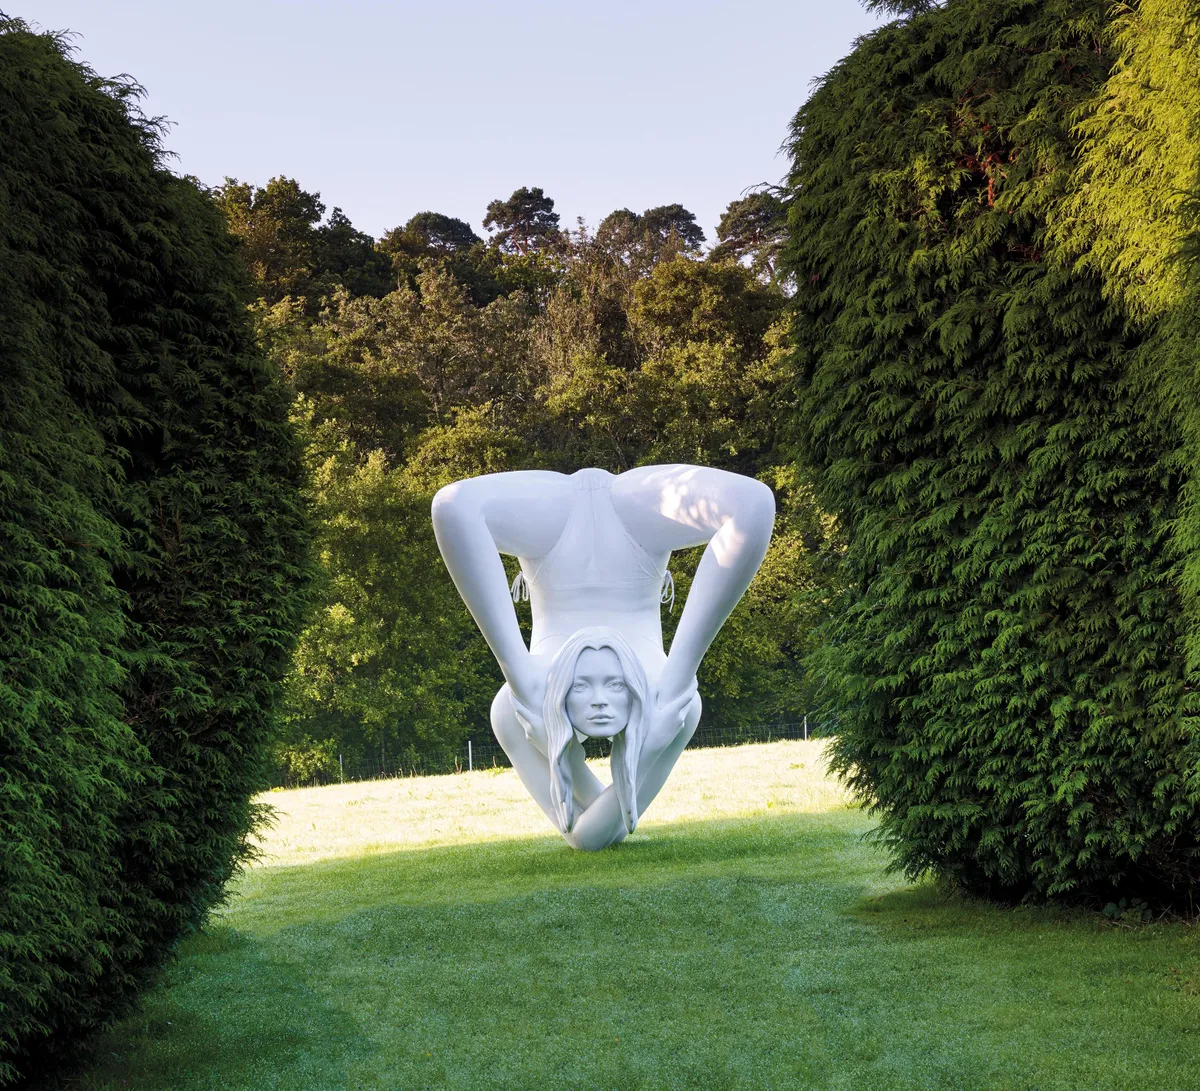 Myth Venus sculpture of Kate Moss by Marc Quinn